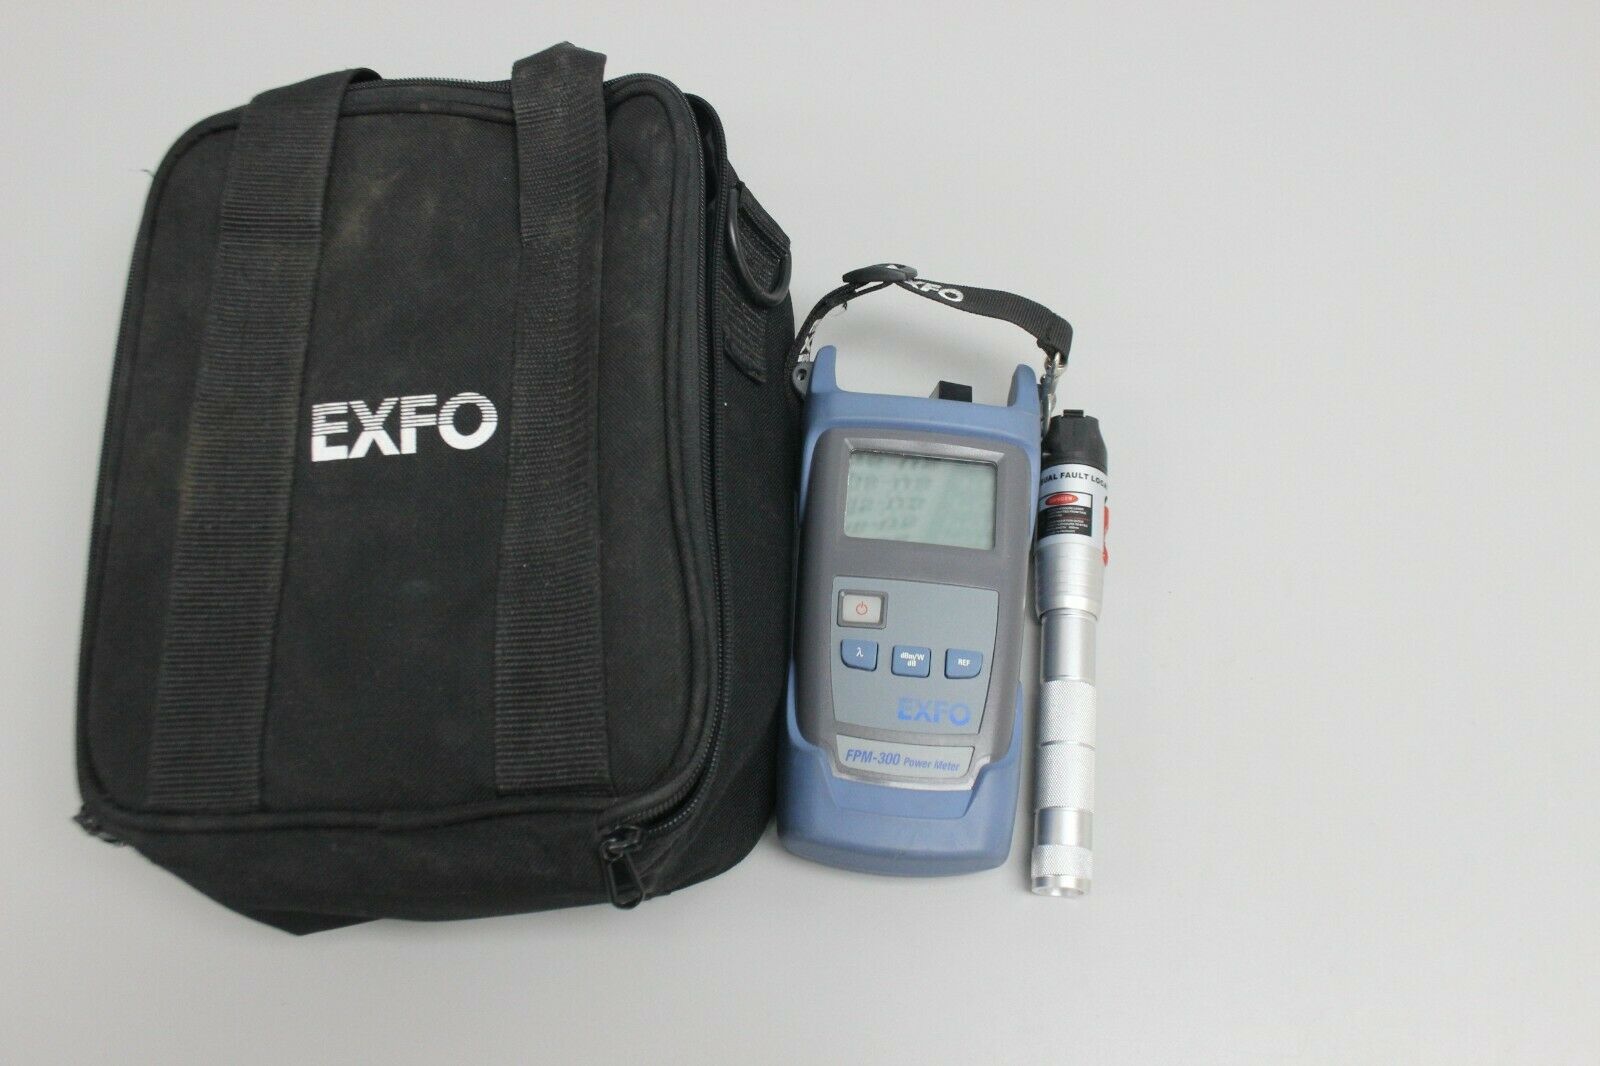 Exfo Fpm-300 Optical Power Meter